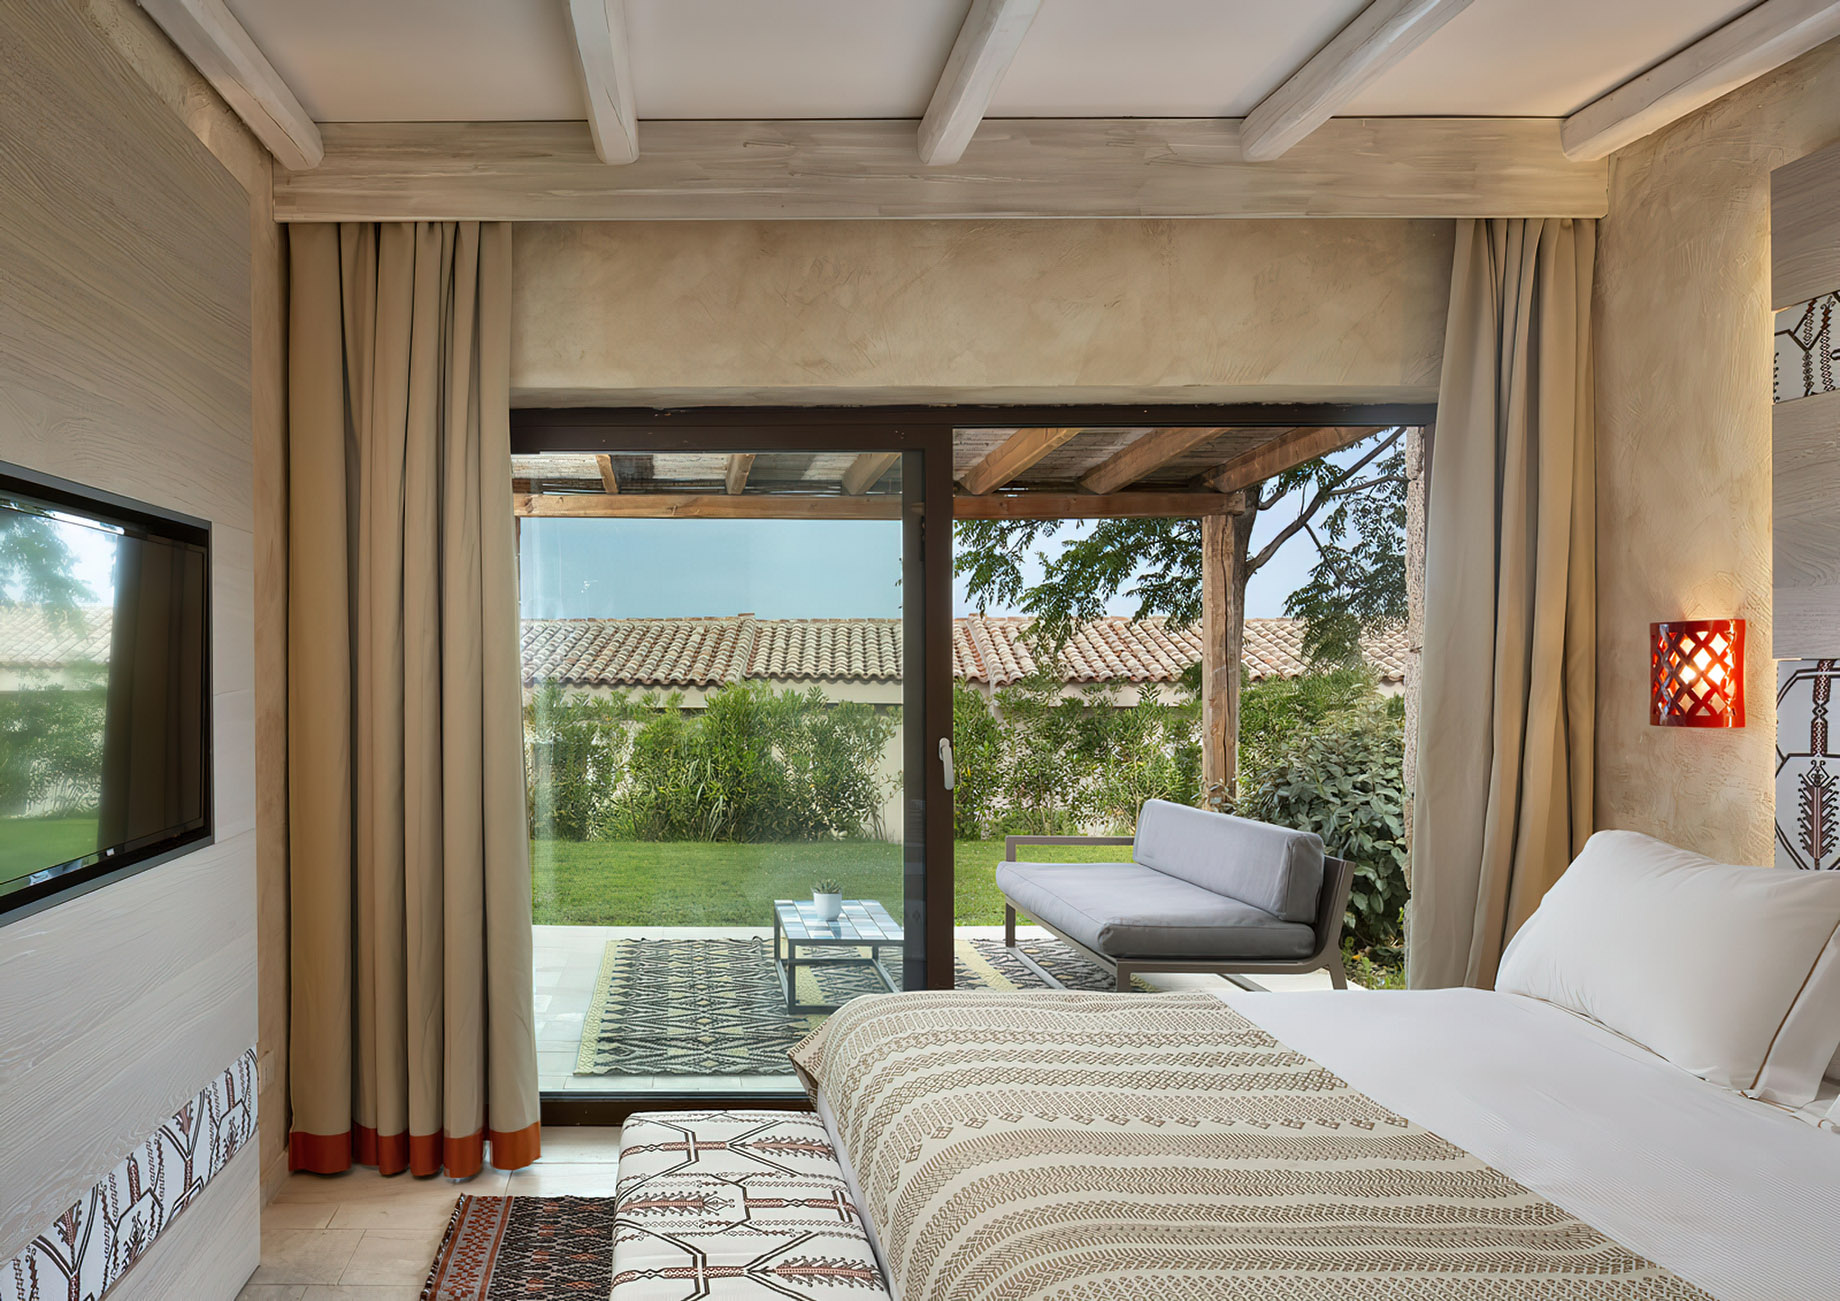 Baglioni Resort Sardinia – San Teodoro, Sardegna, Italy – San Pietro Suite Bedroom